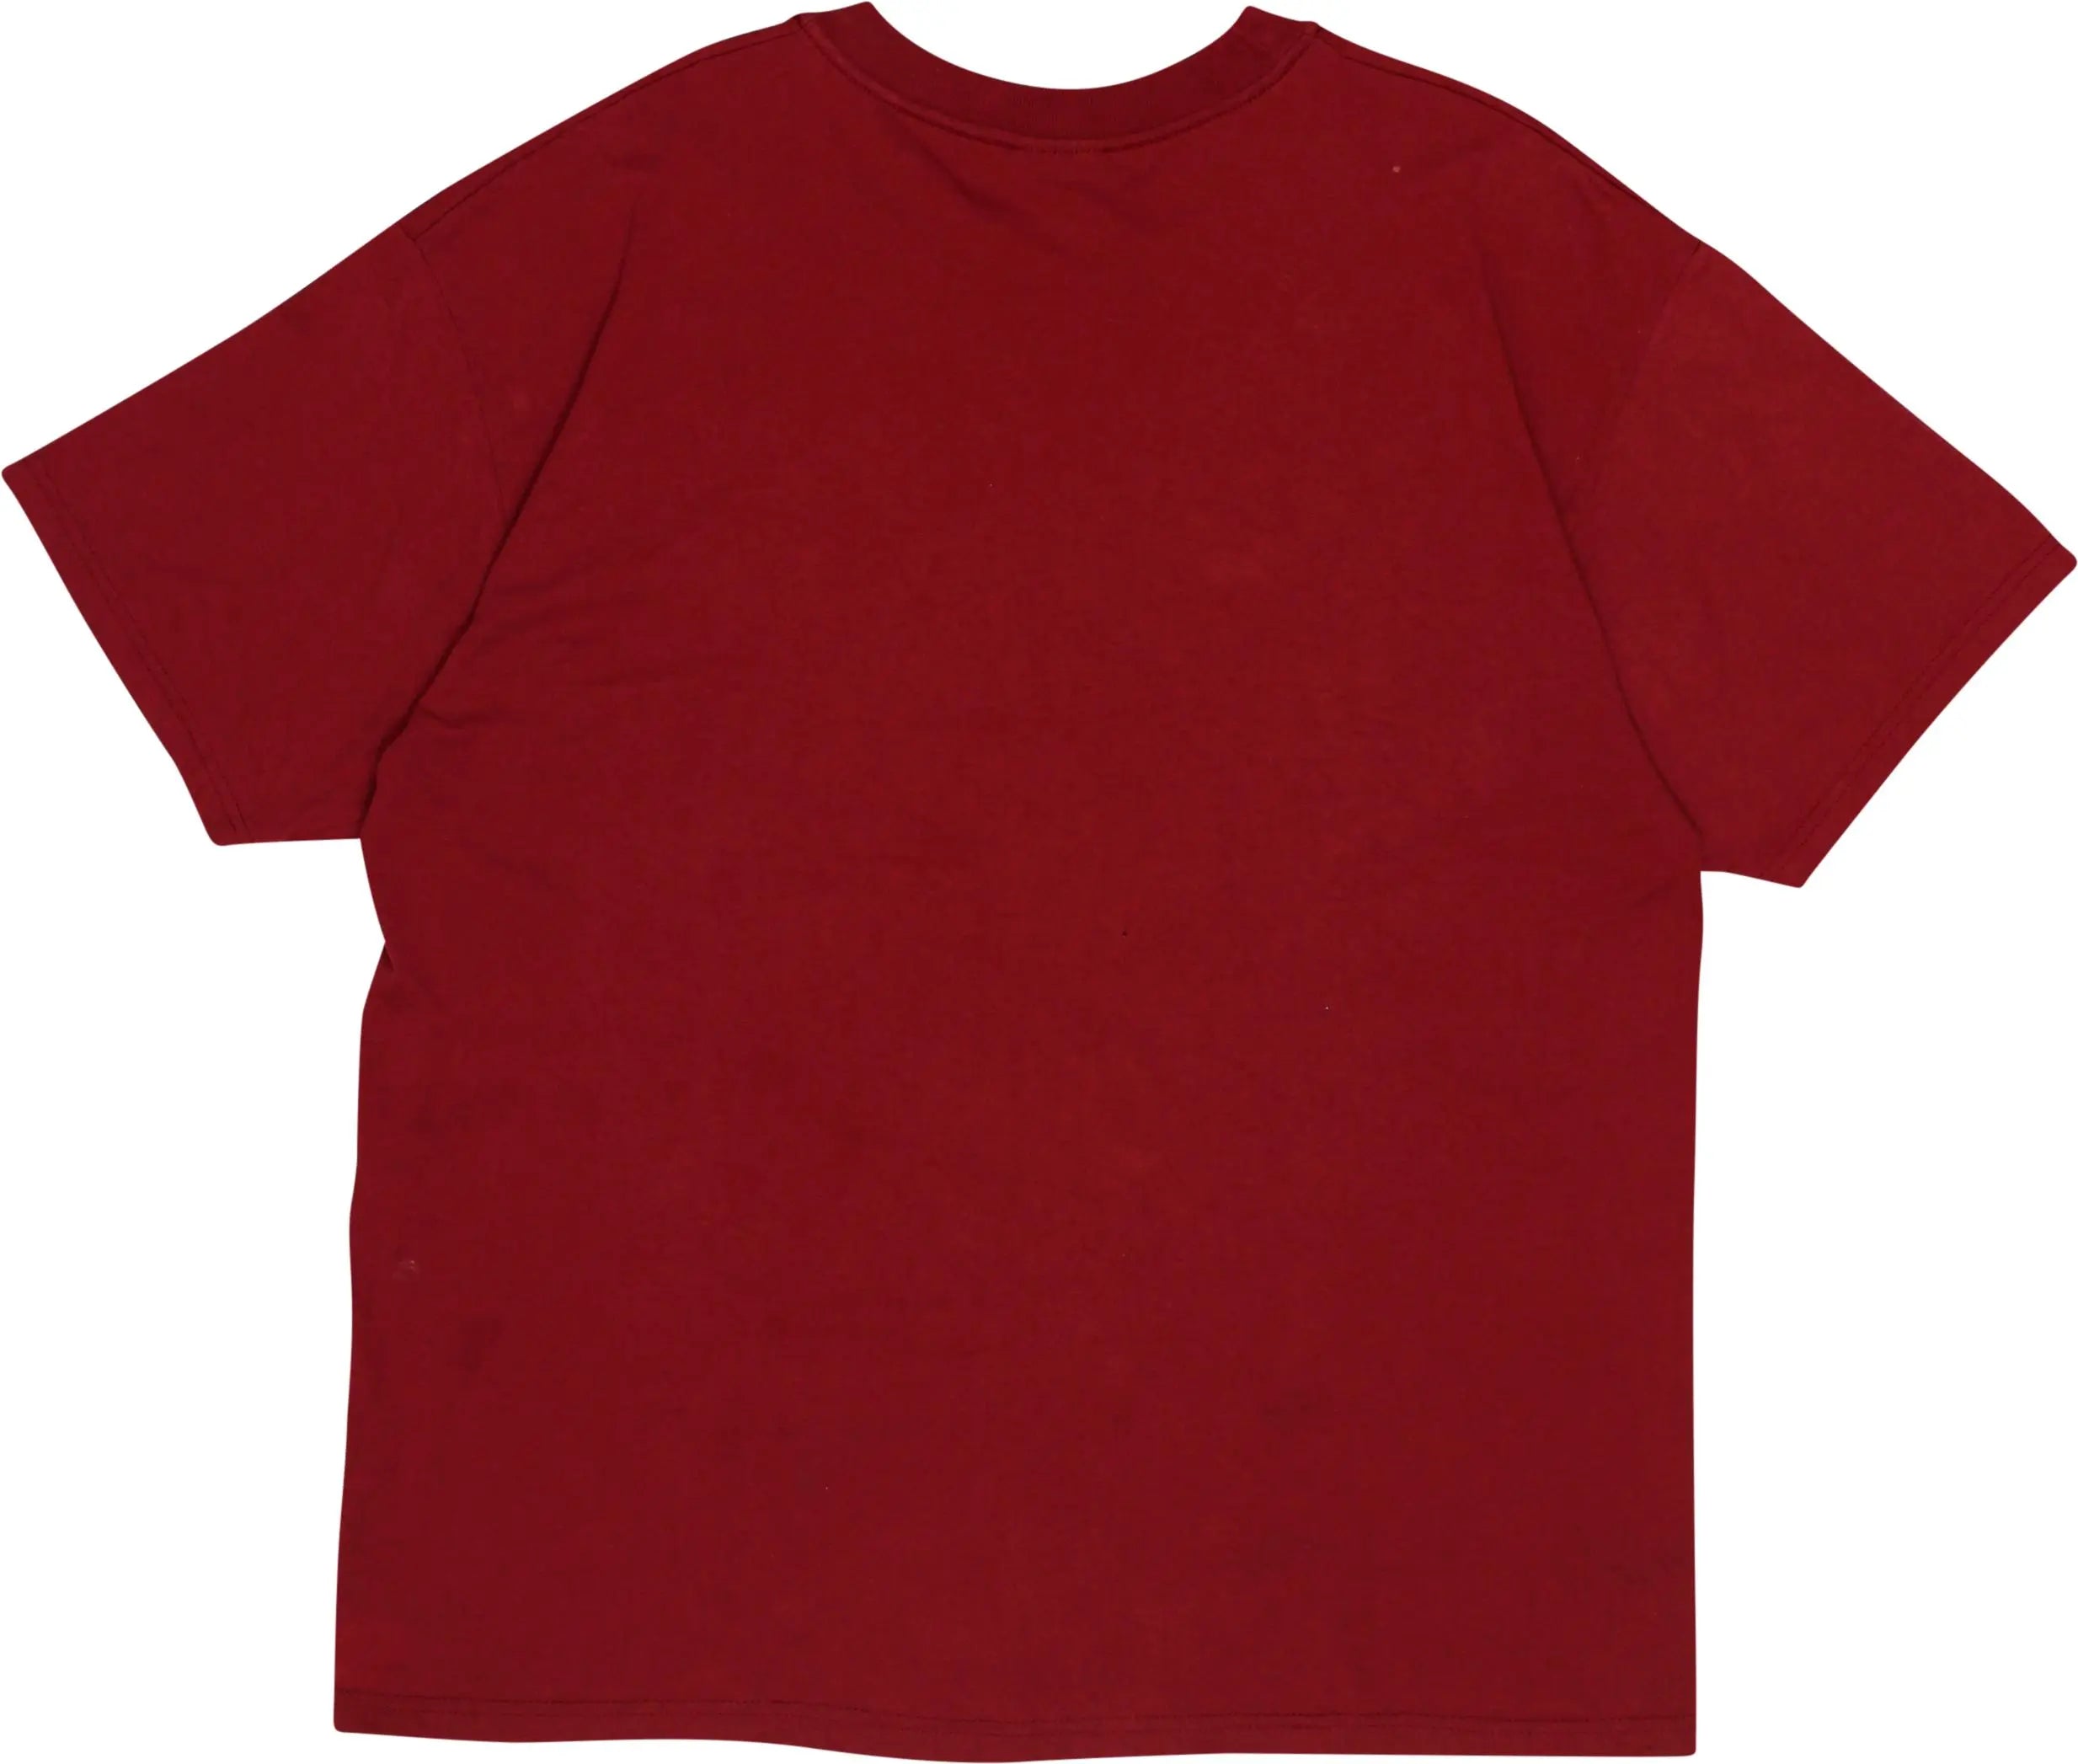 Hanes - 90s Arkansas Razorbacks T-Shirt- ThriftTale.com - Vintage and second handclothing